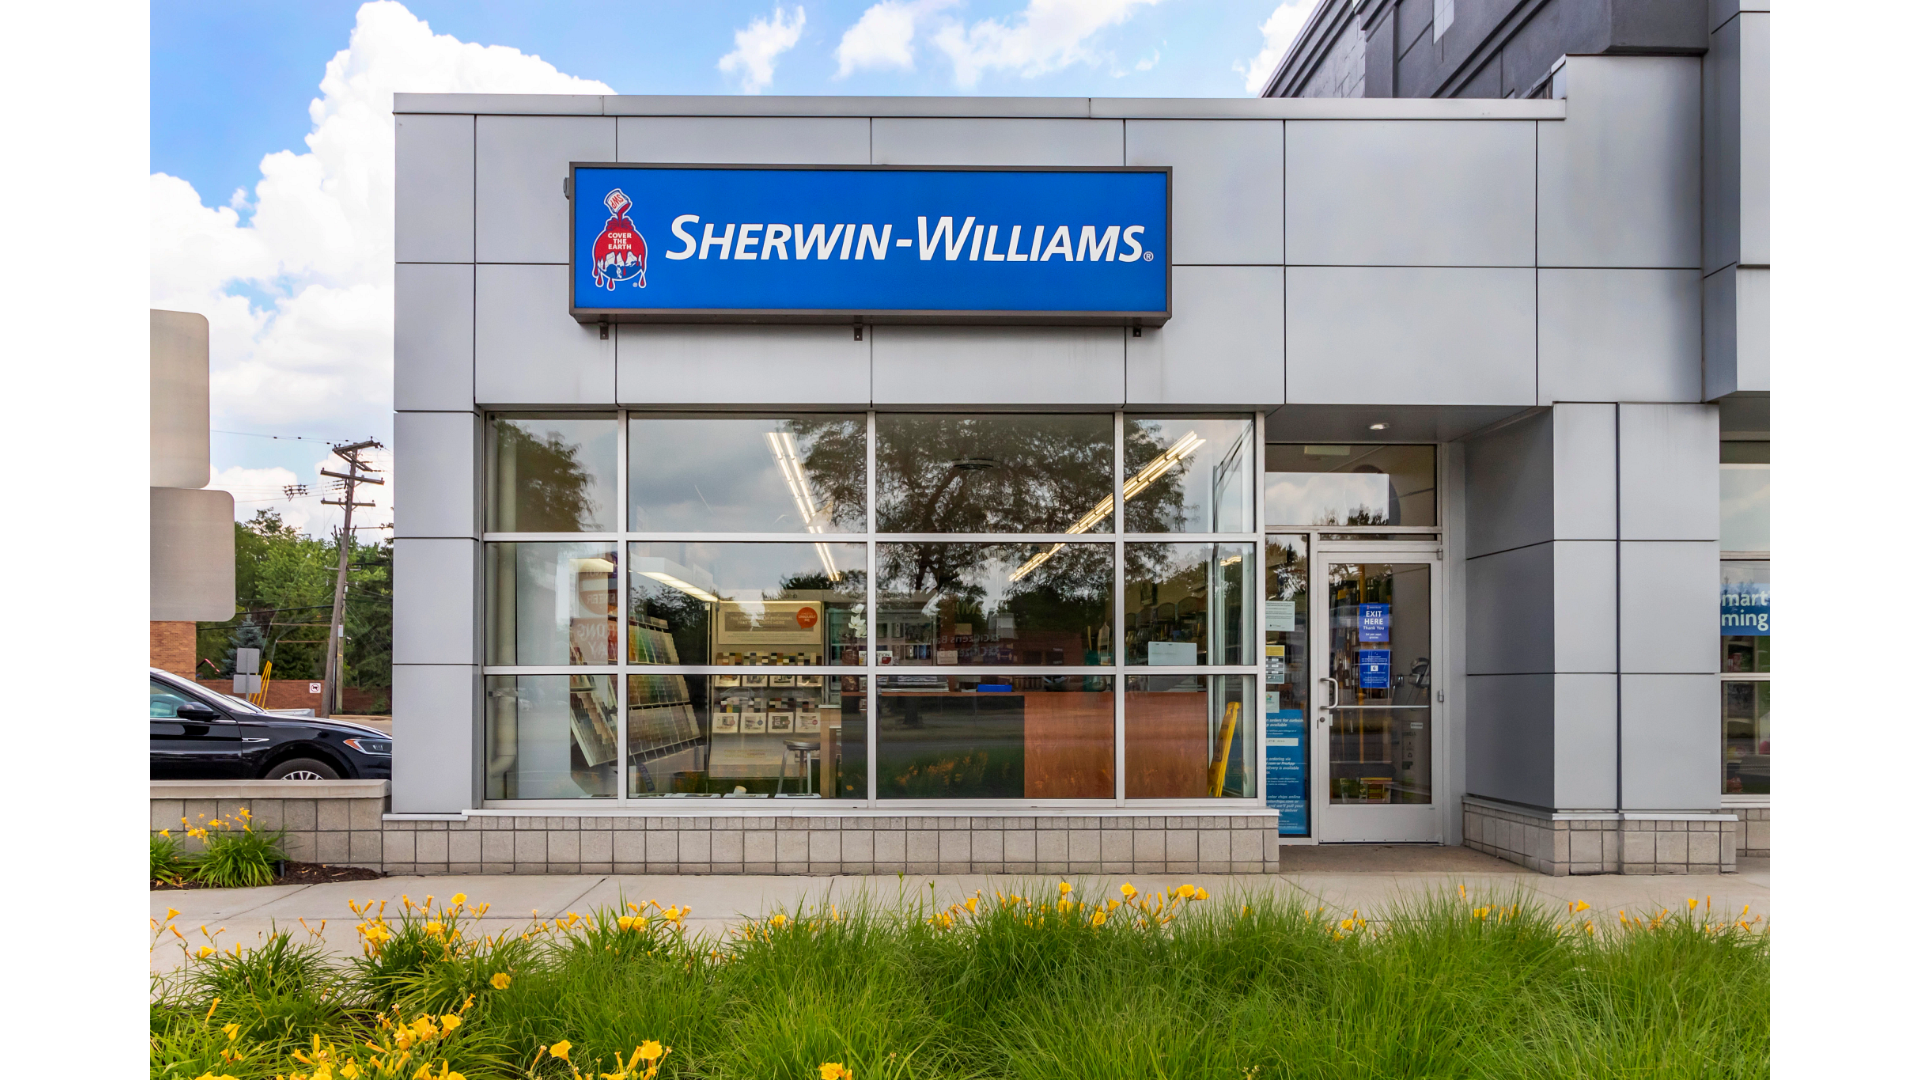 Sherwin-Williams Paint Store